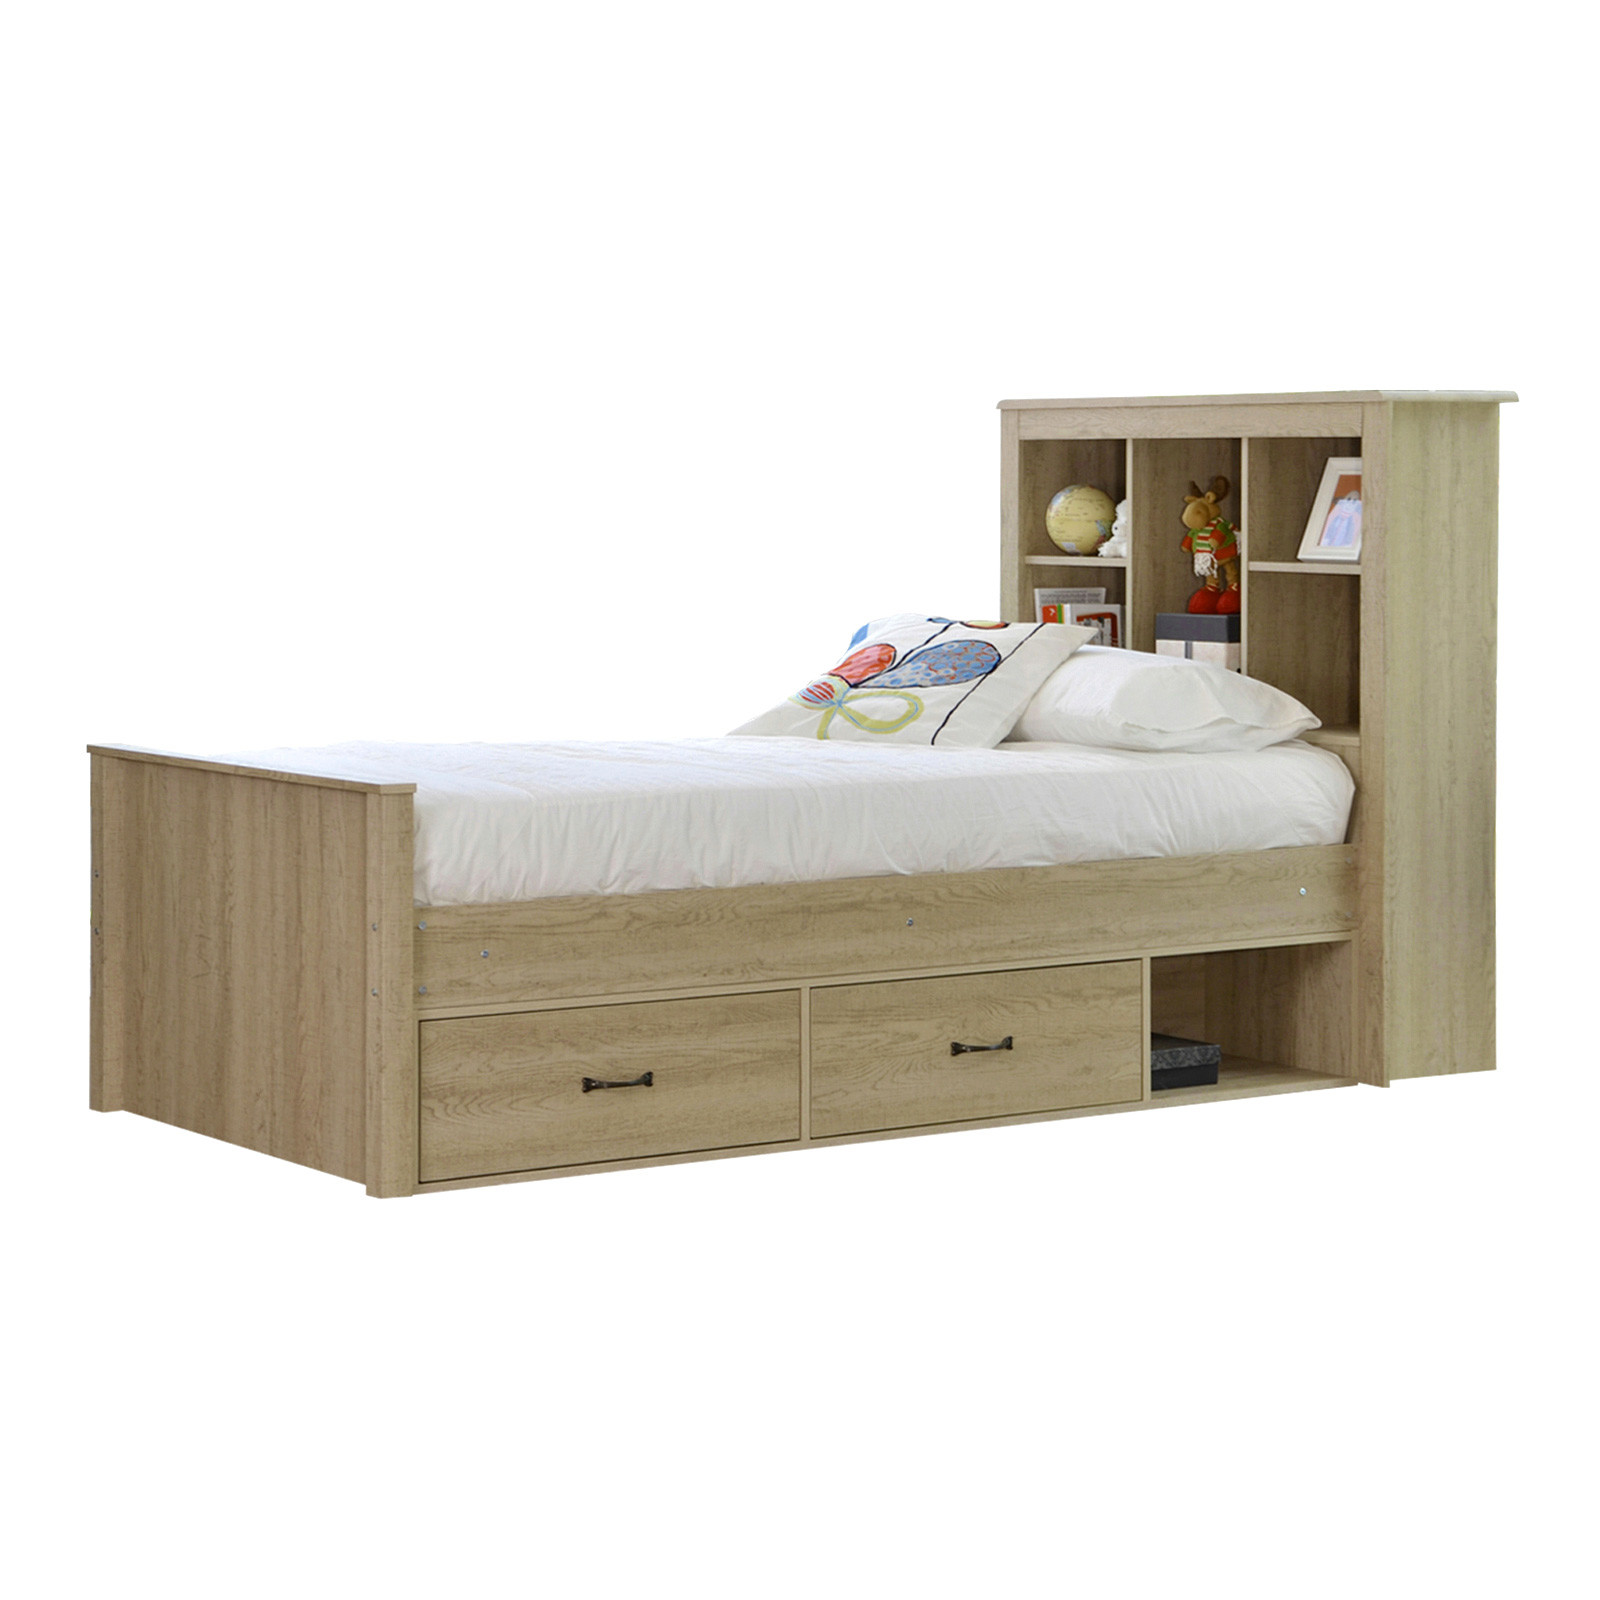 Vic Furniture Jeppe Oak King Single Bed, Oak King Size Bed Frame With Storage